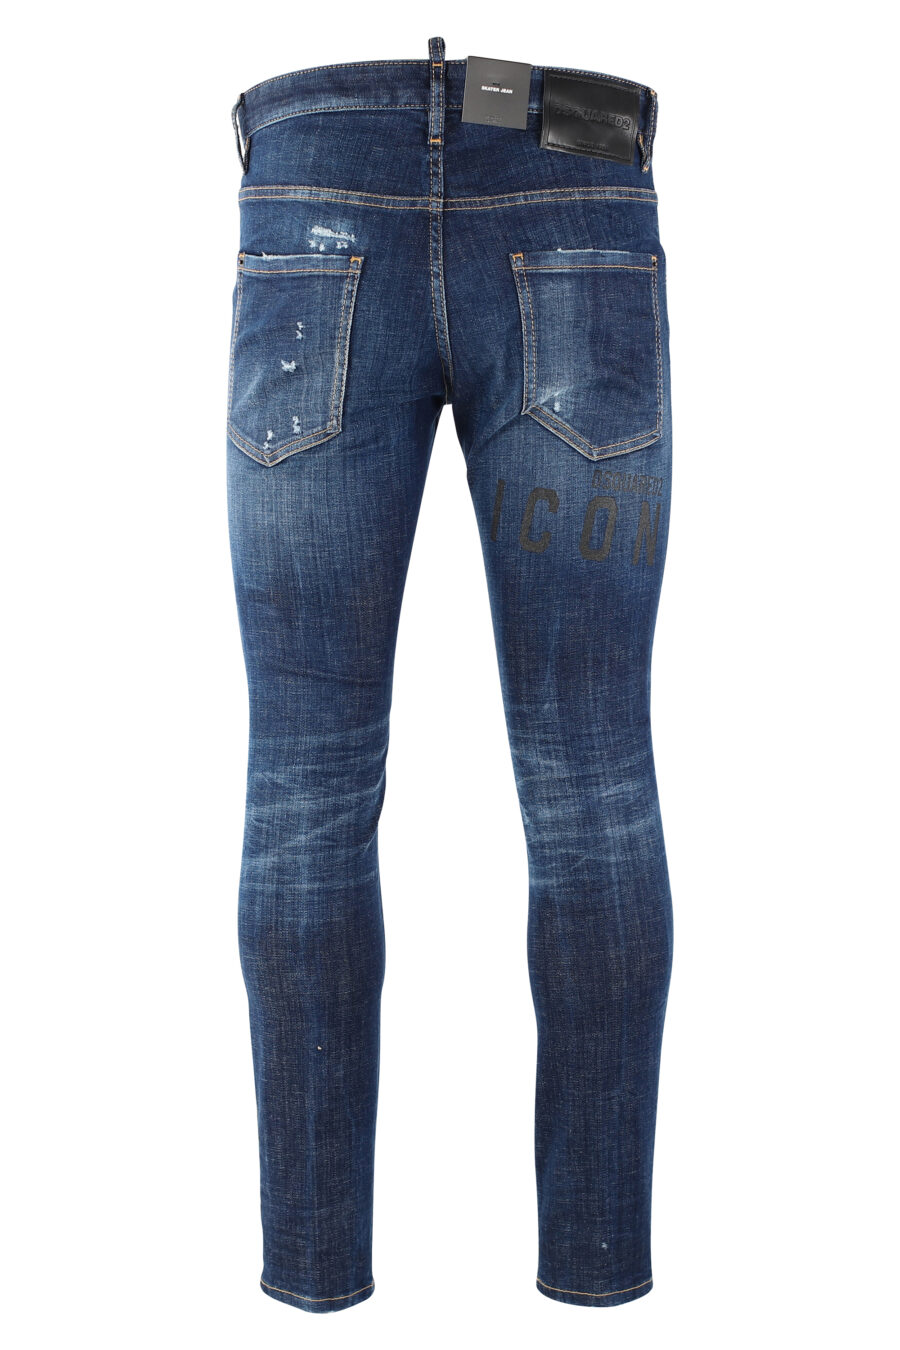 Jeanshose "icon skater jean" dunkelblau semi-getragen - IMG 9658